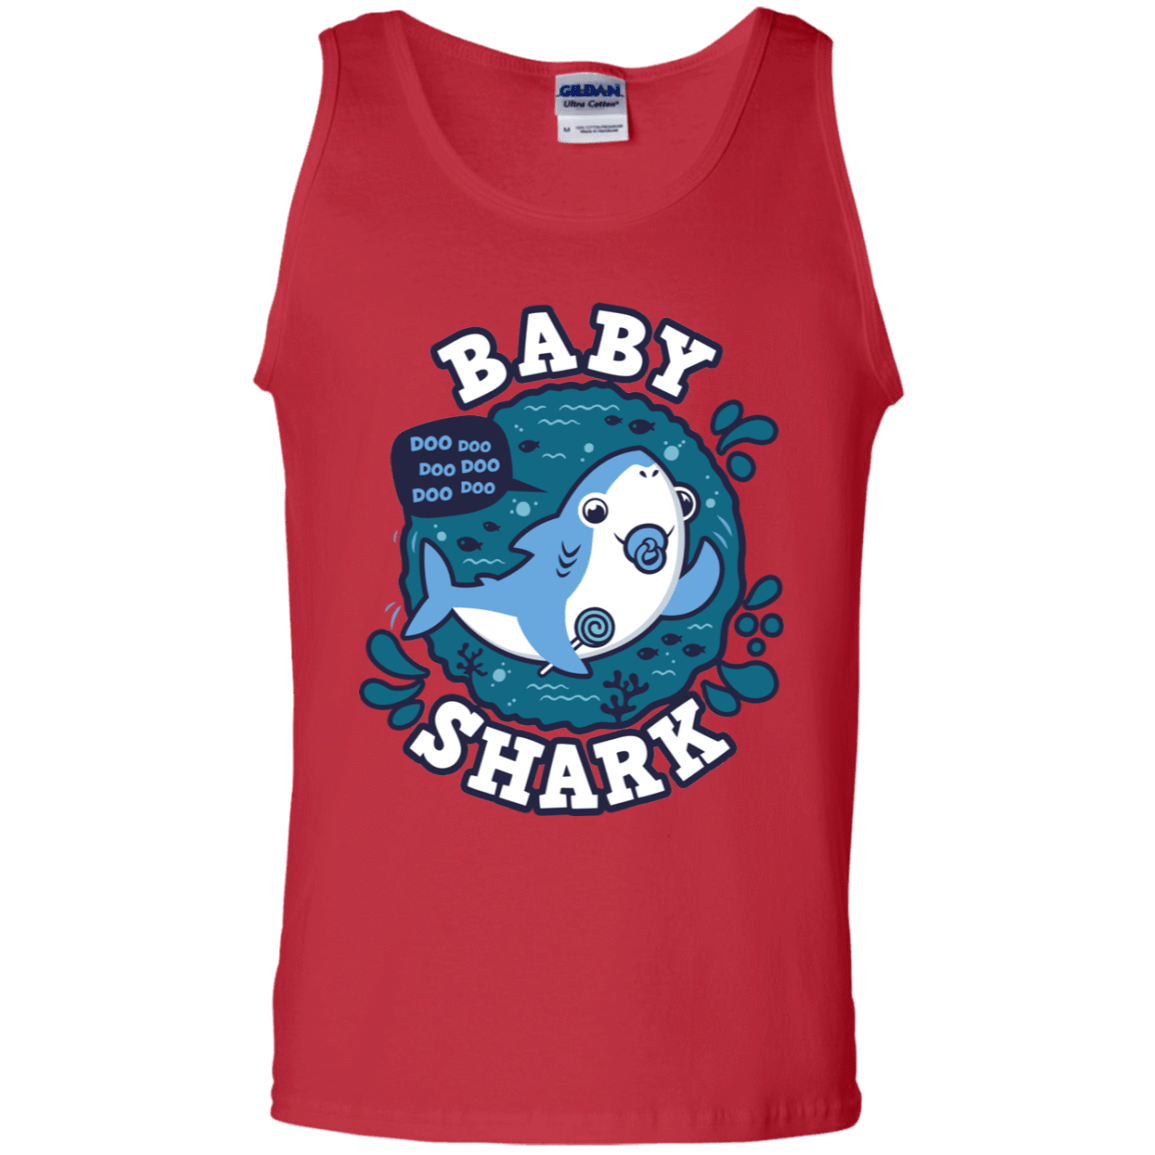 T-Shirts Red / S Shark Family trazo - Baby Boy chupete Men's Tank Top